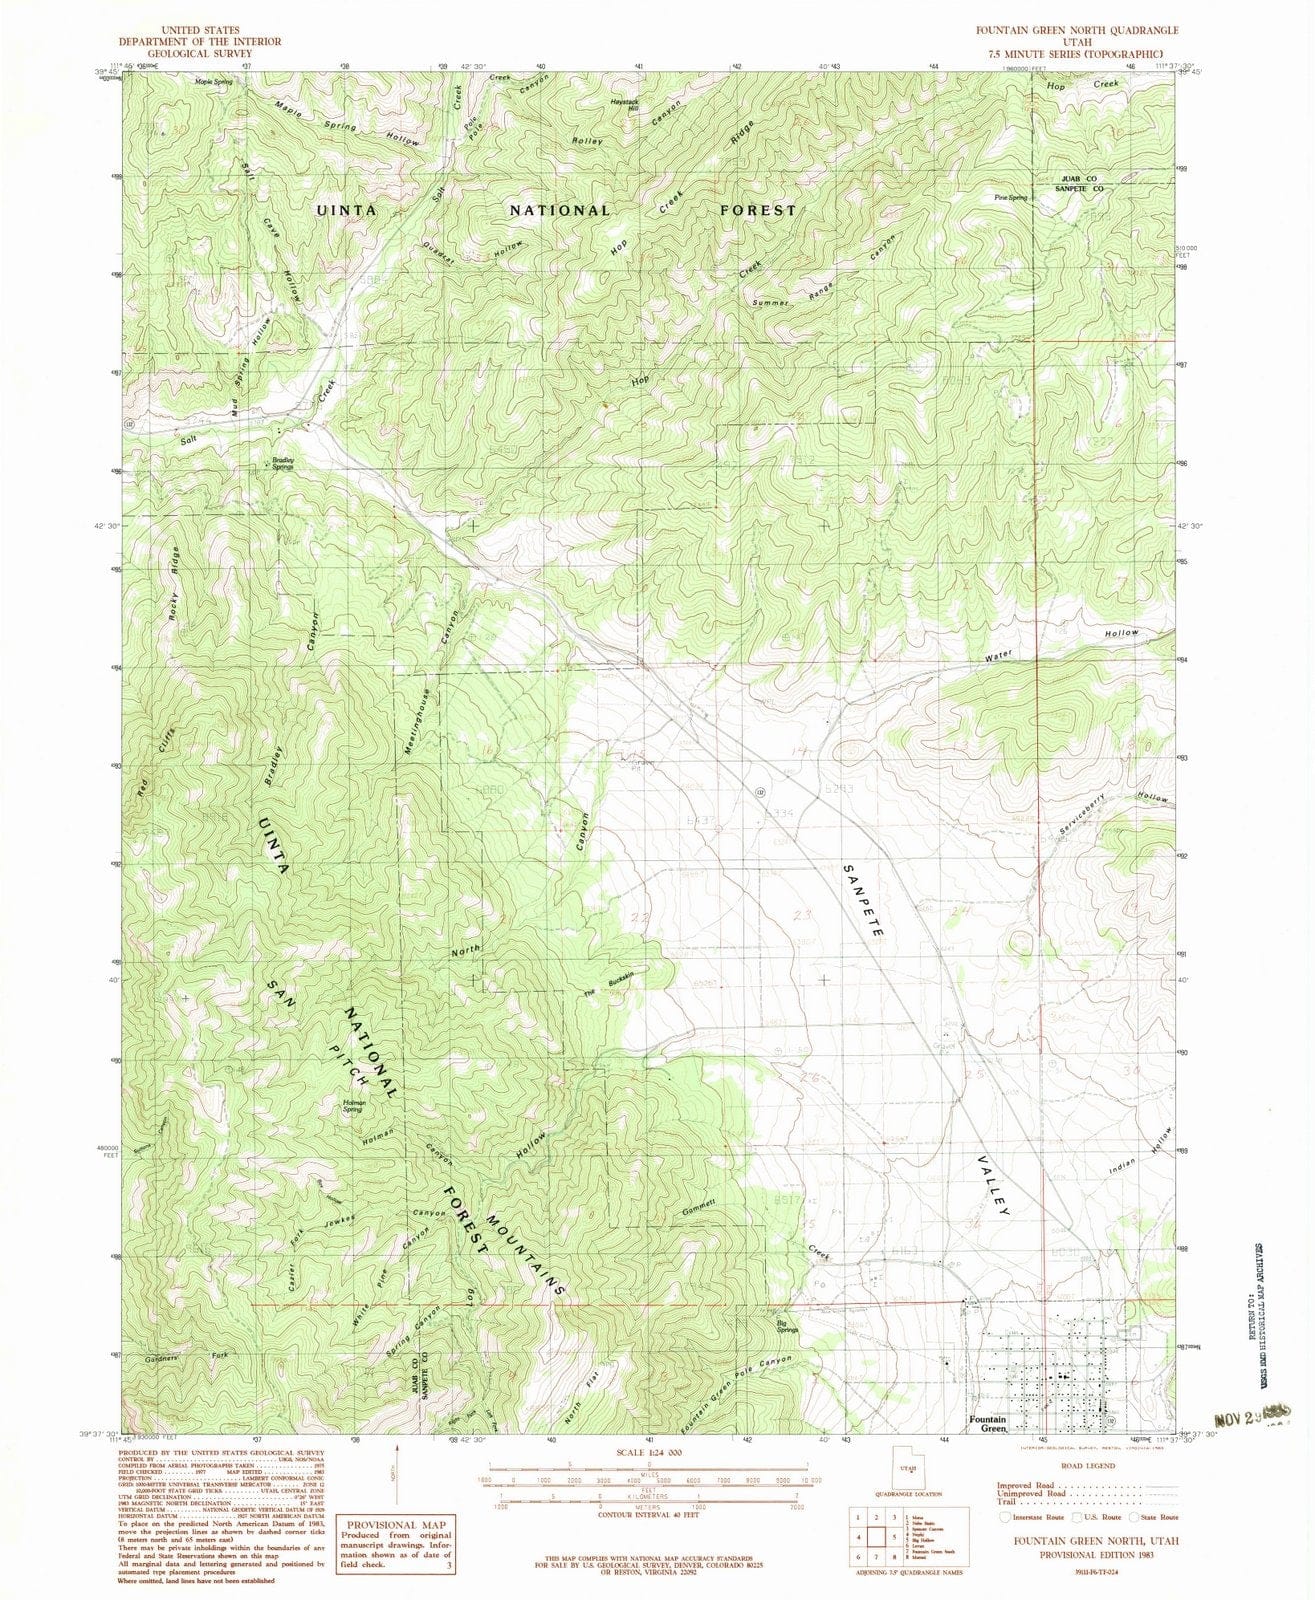 1983 Fountain Green North, UT - Utah - USGS Topographic Map